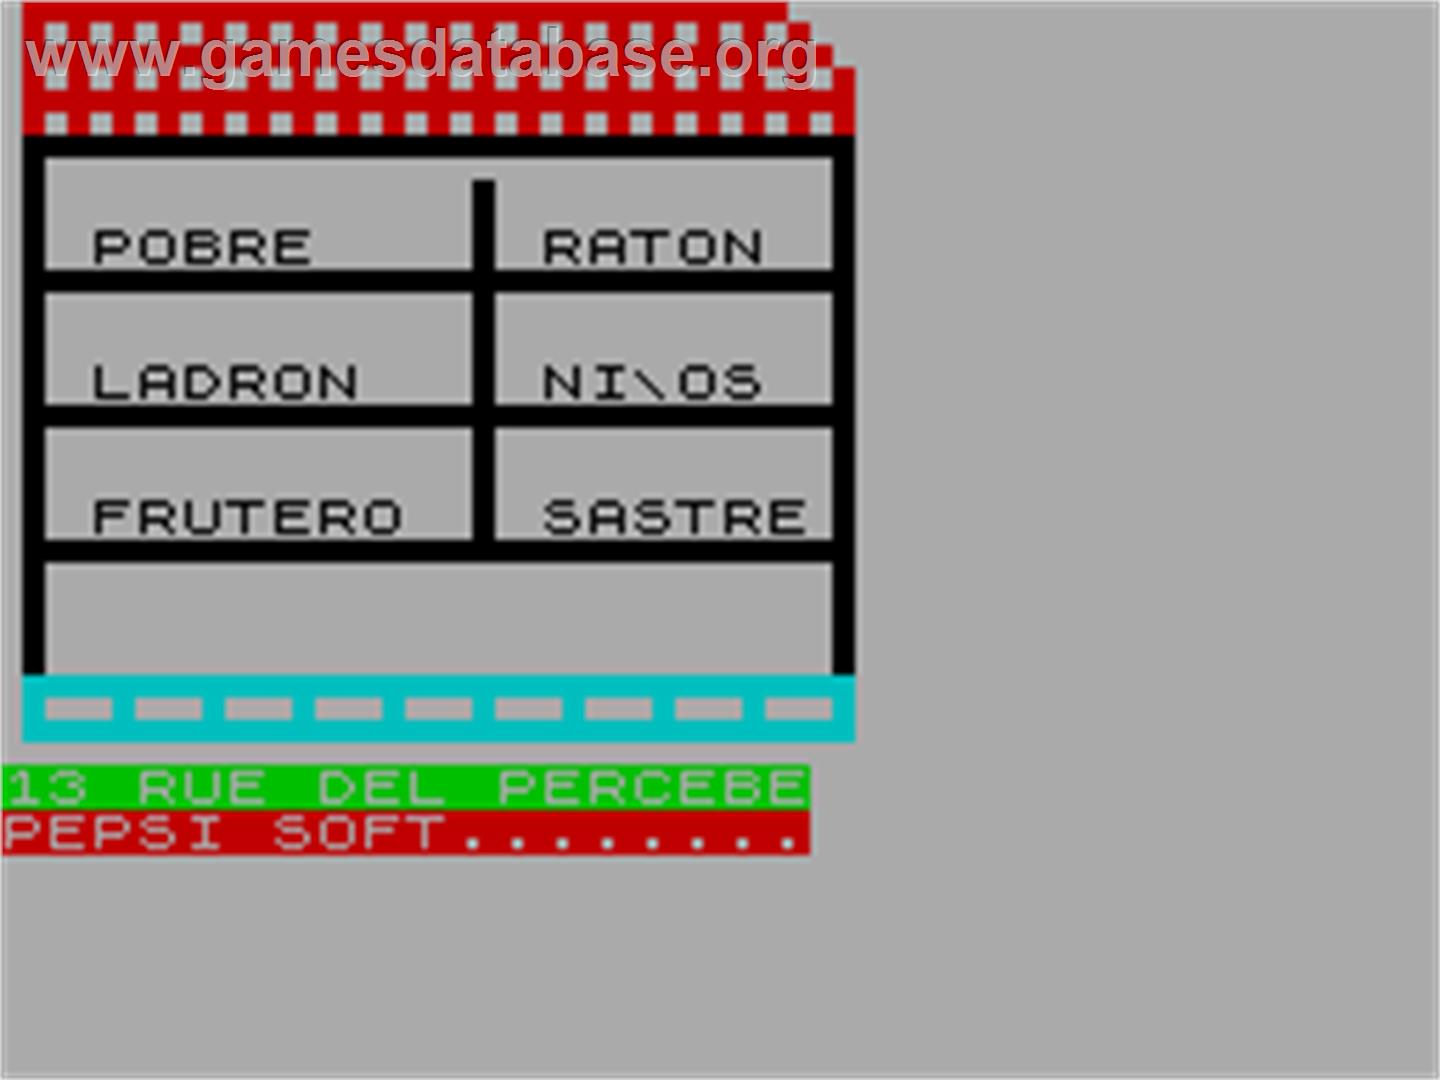 13 Rue del Percebe - Sinclair ZX Spectrum - Artwork - Title Screen